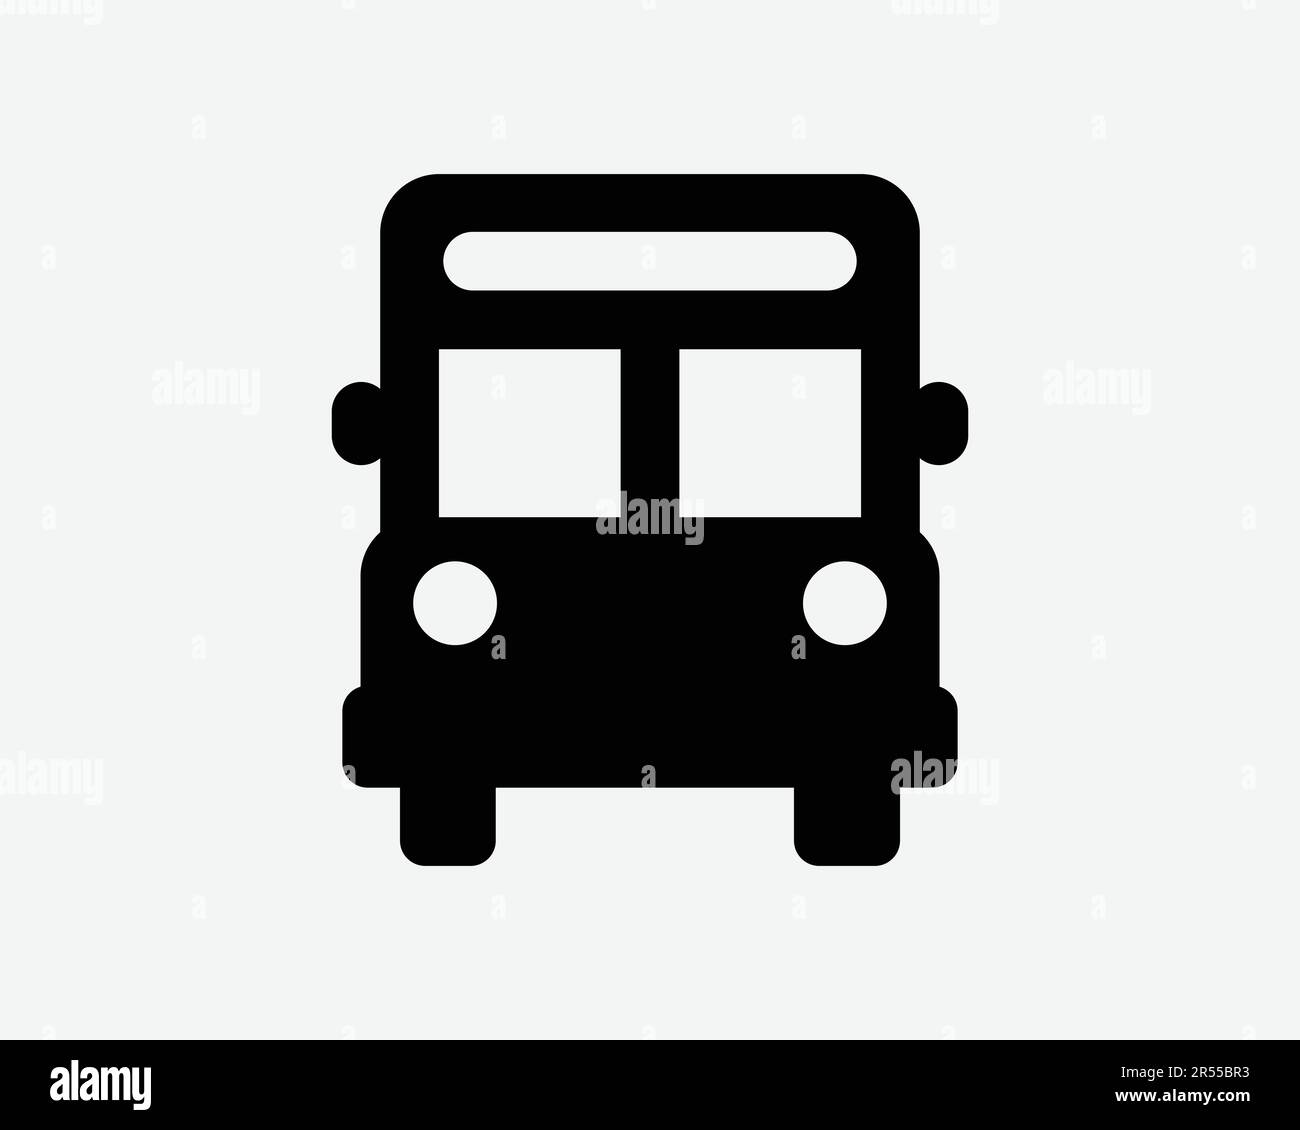 Bus Front View Icon. Public Transport Transportation School Vehicle Frontal Shape Sign Symbol Black Artwork Graphic Illustration Clipart EPS Vector Stock Vector